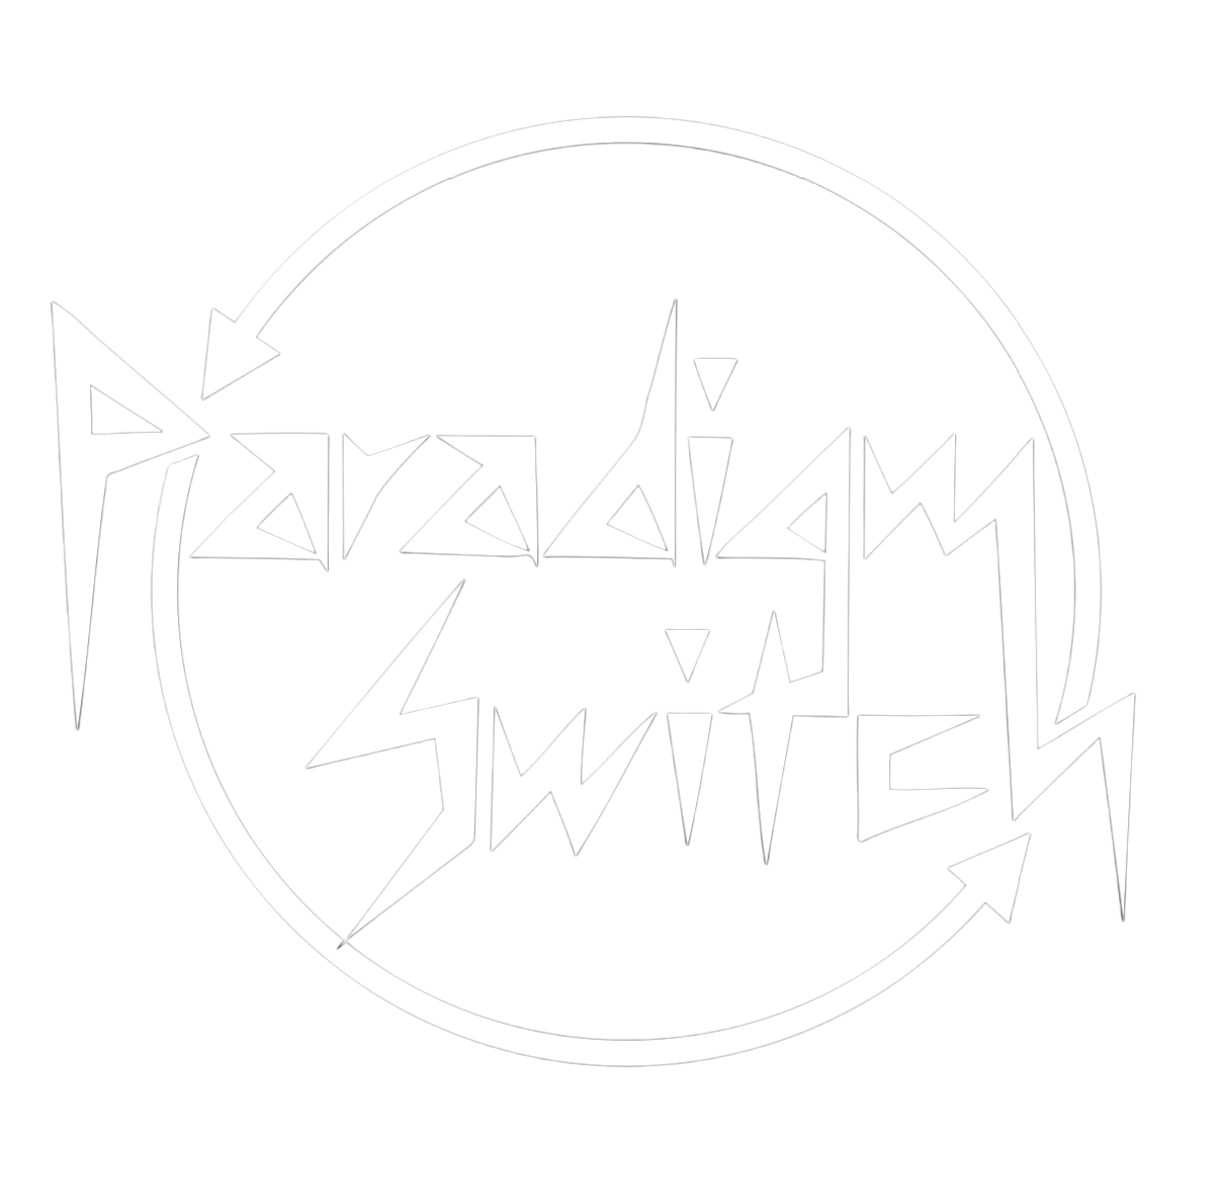 Paradigm Switch